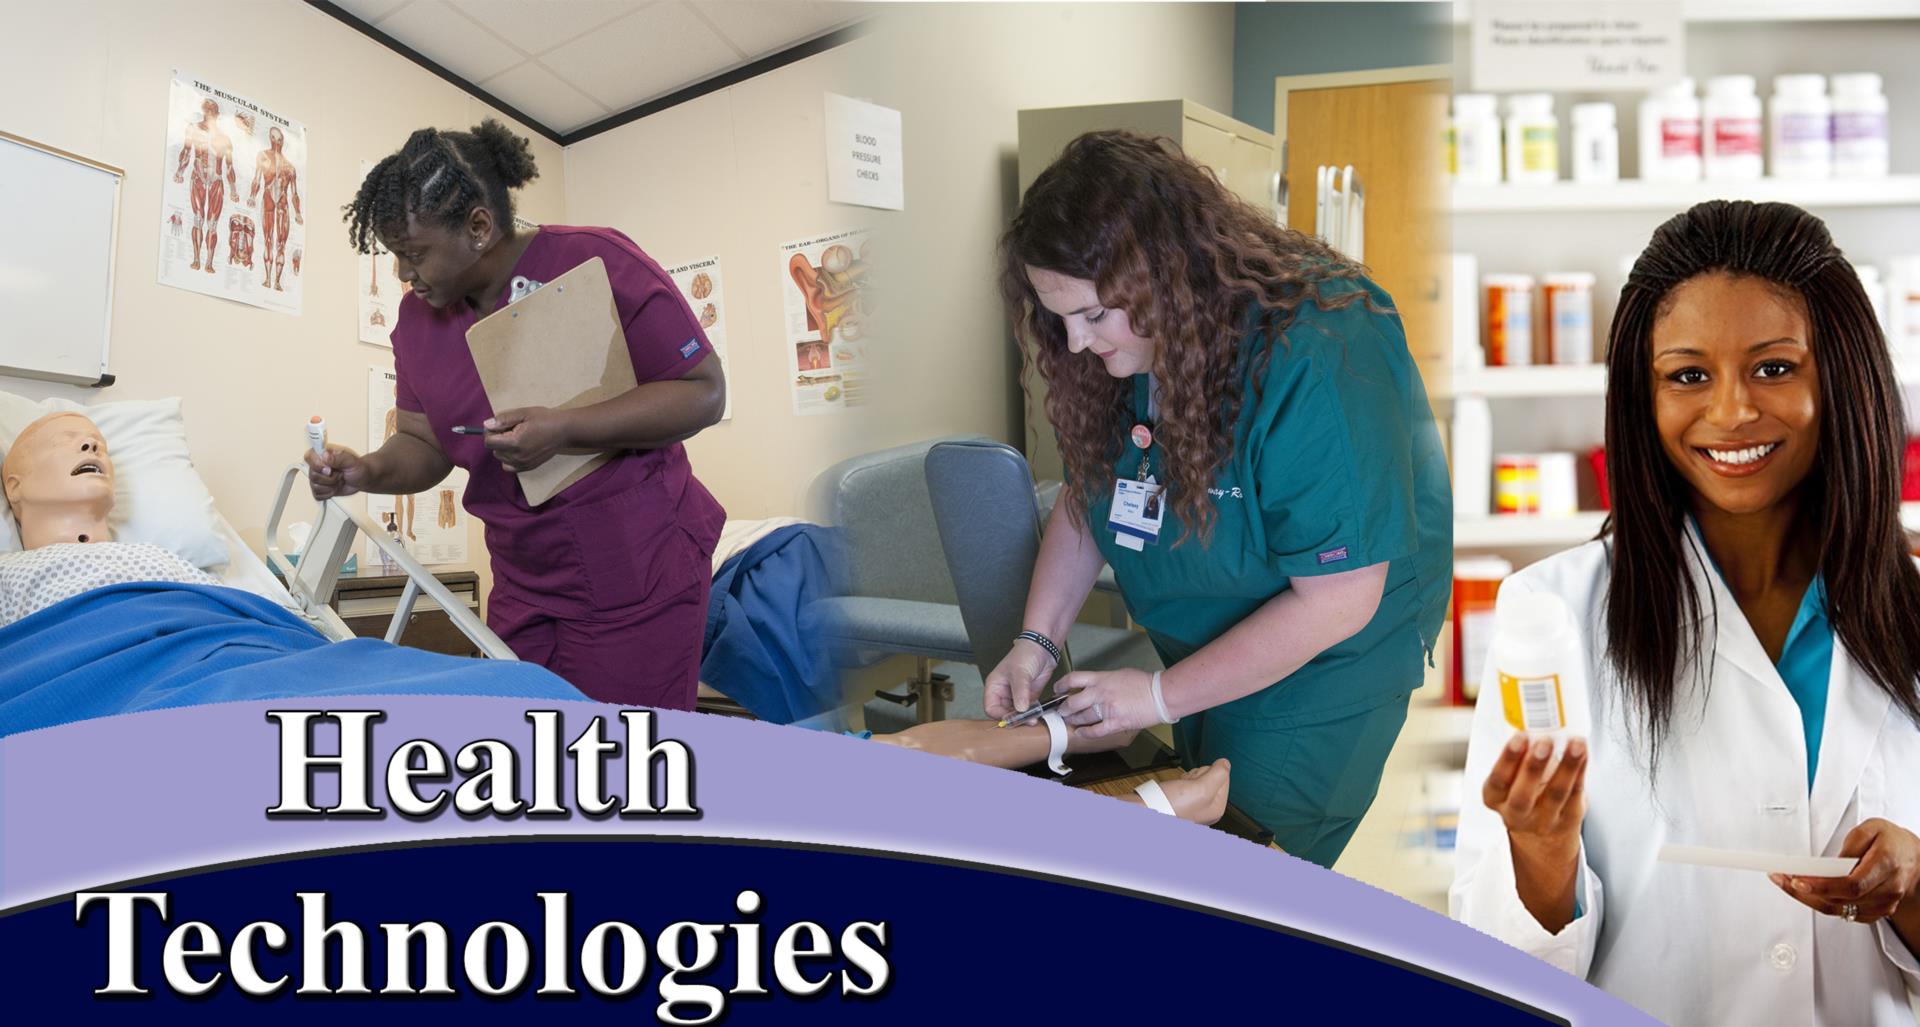 health technologies: photos of health tech students